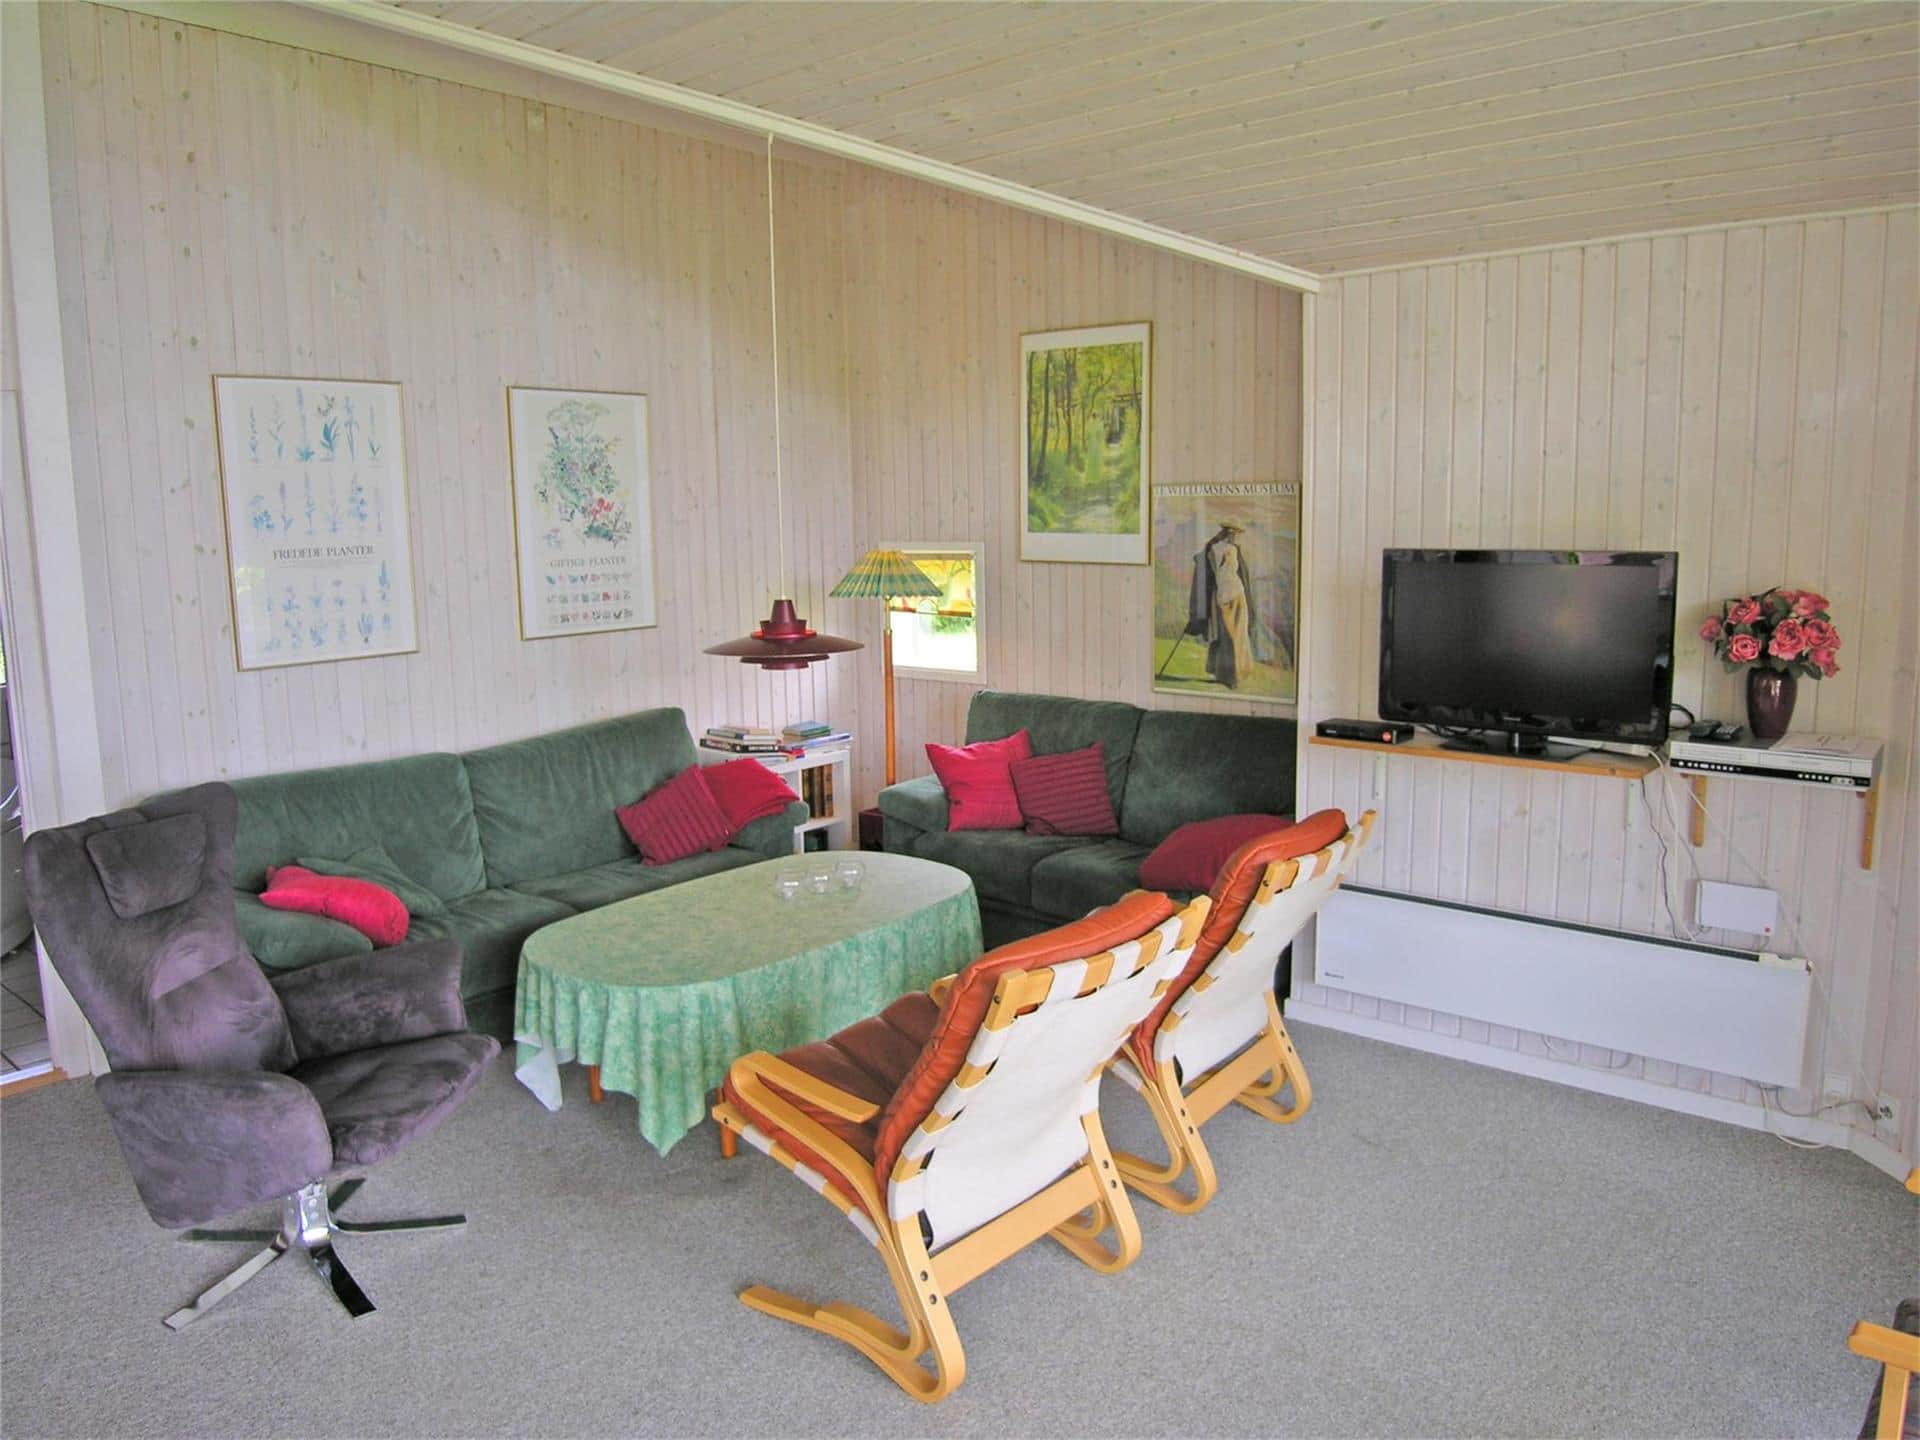 Livingroom 1 Image 3-19 Holiday-home 40515, Pøt Strandby 400, DK - 7130 Juelsminde